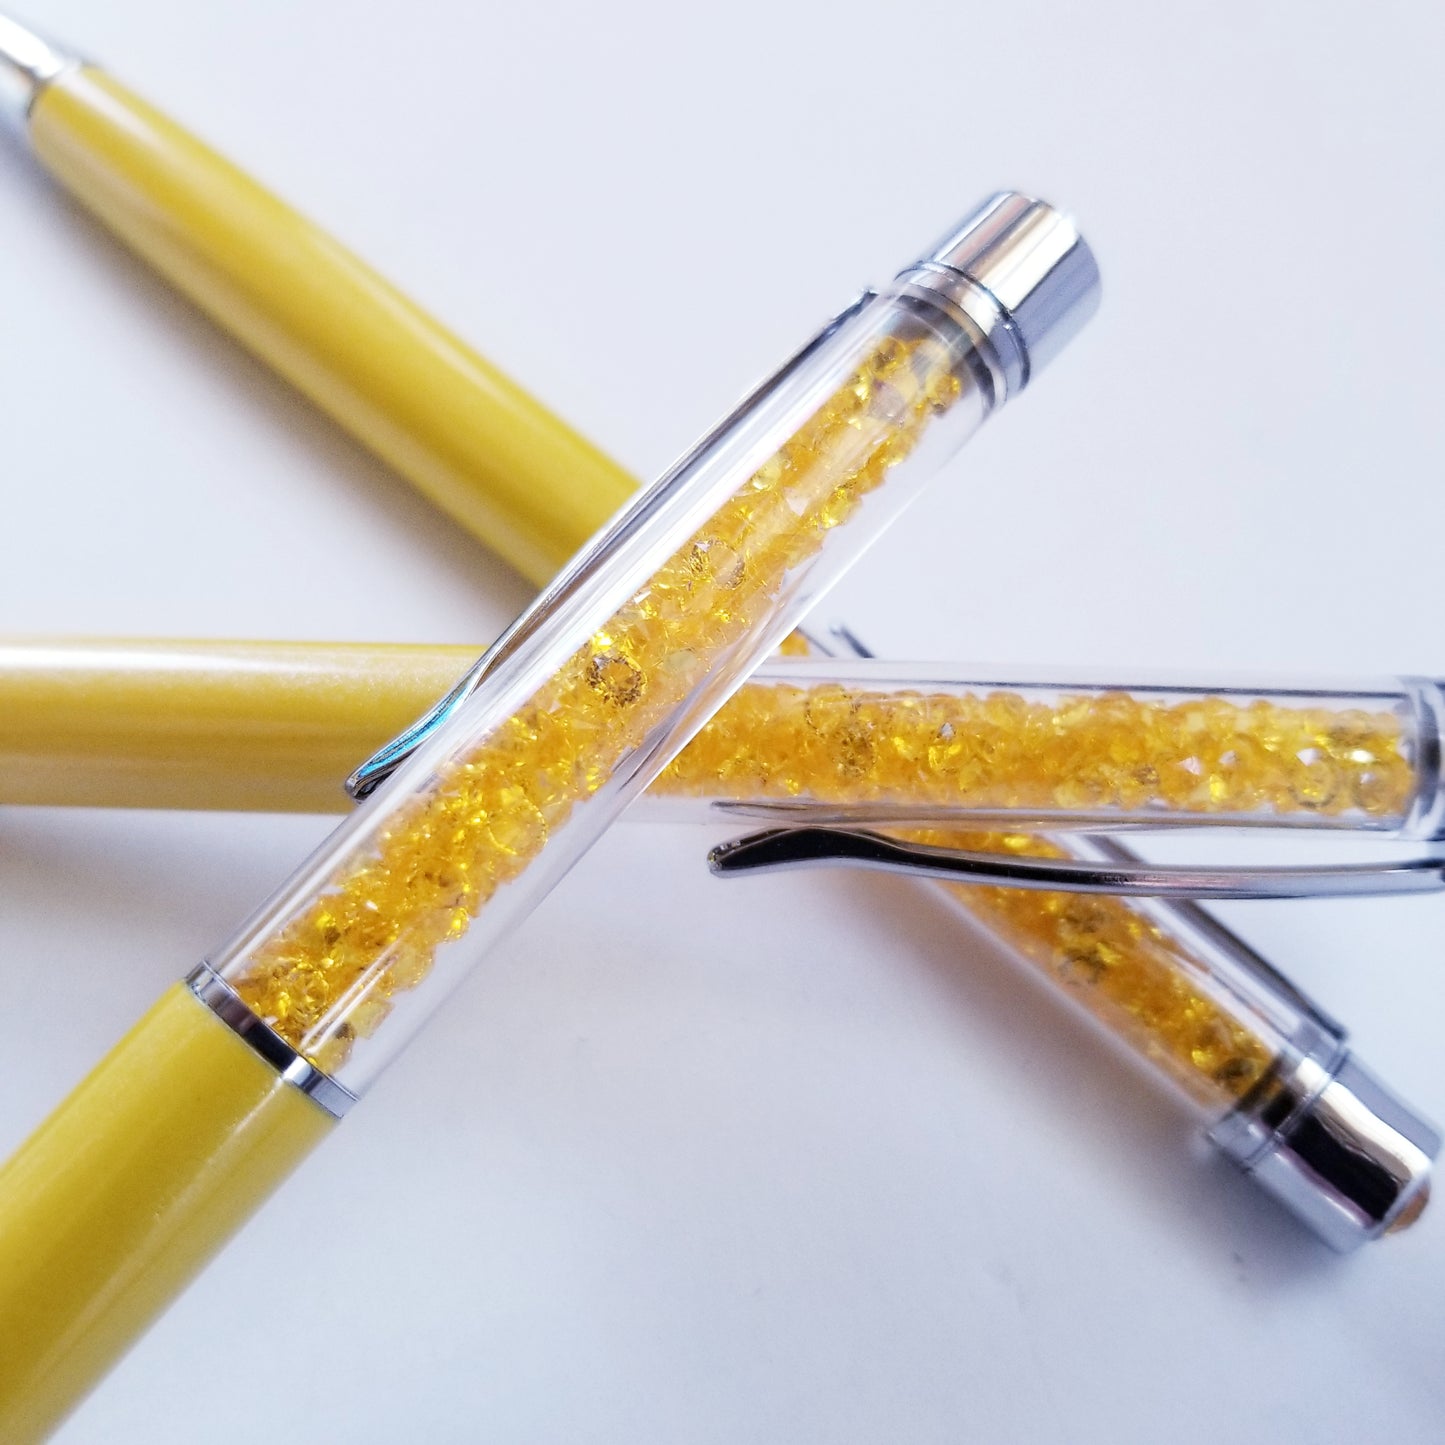 Yellow Crystal Pen